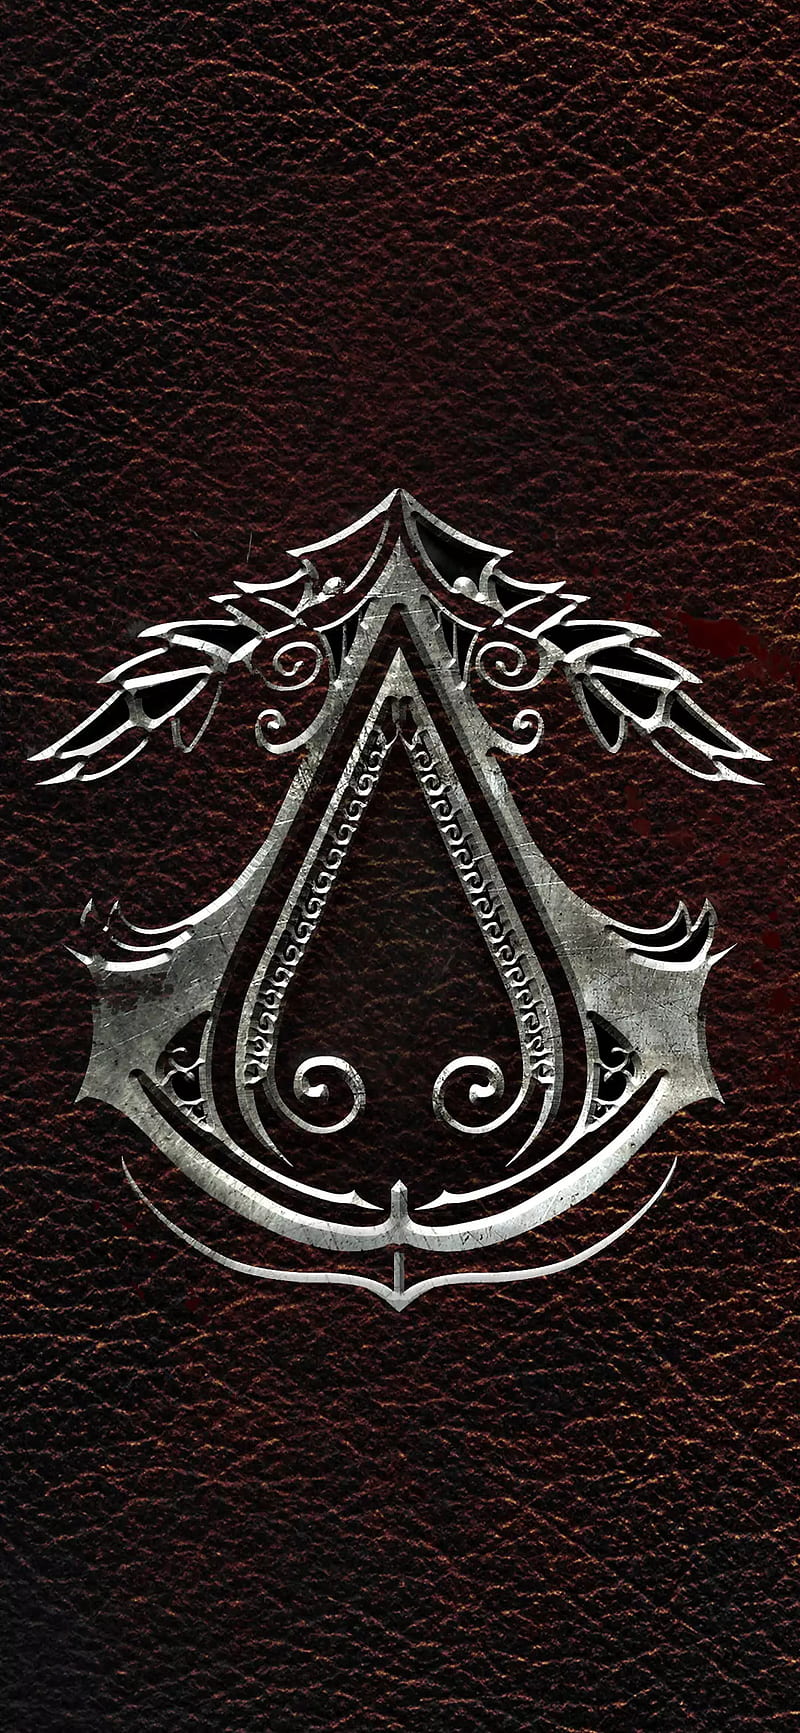 Warrior knight sword fighter brotherhood logo Vector Image